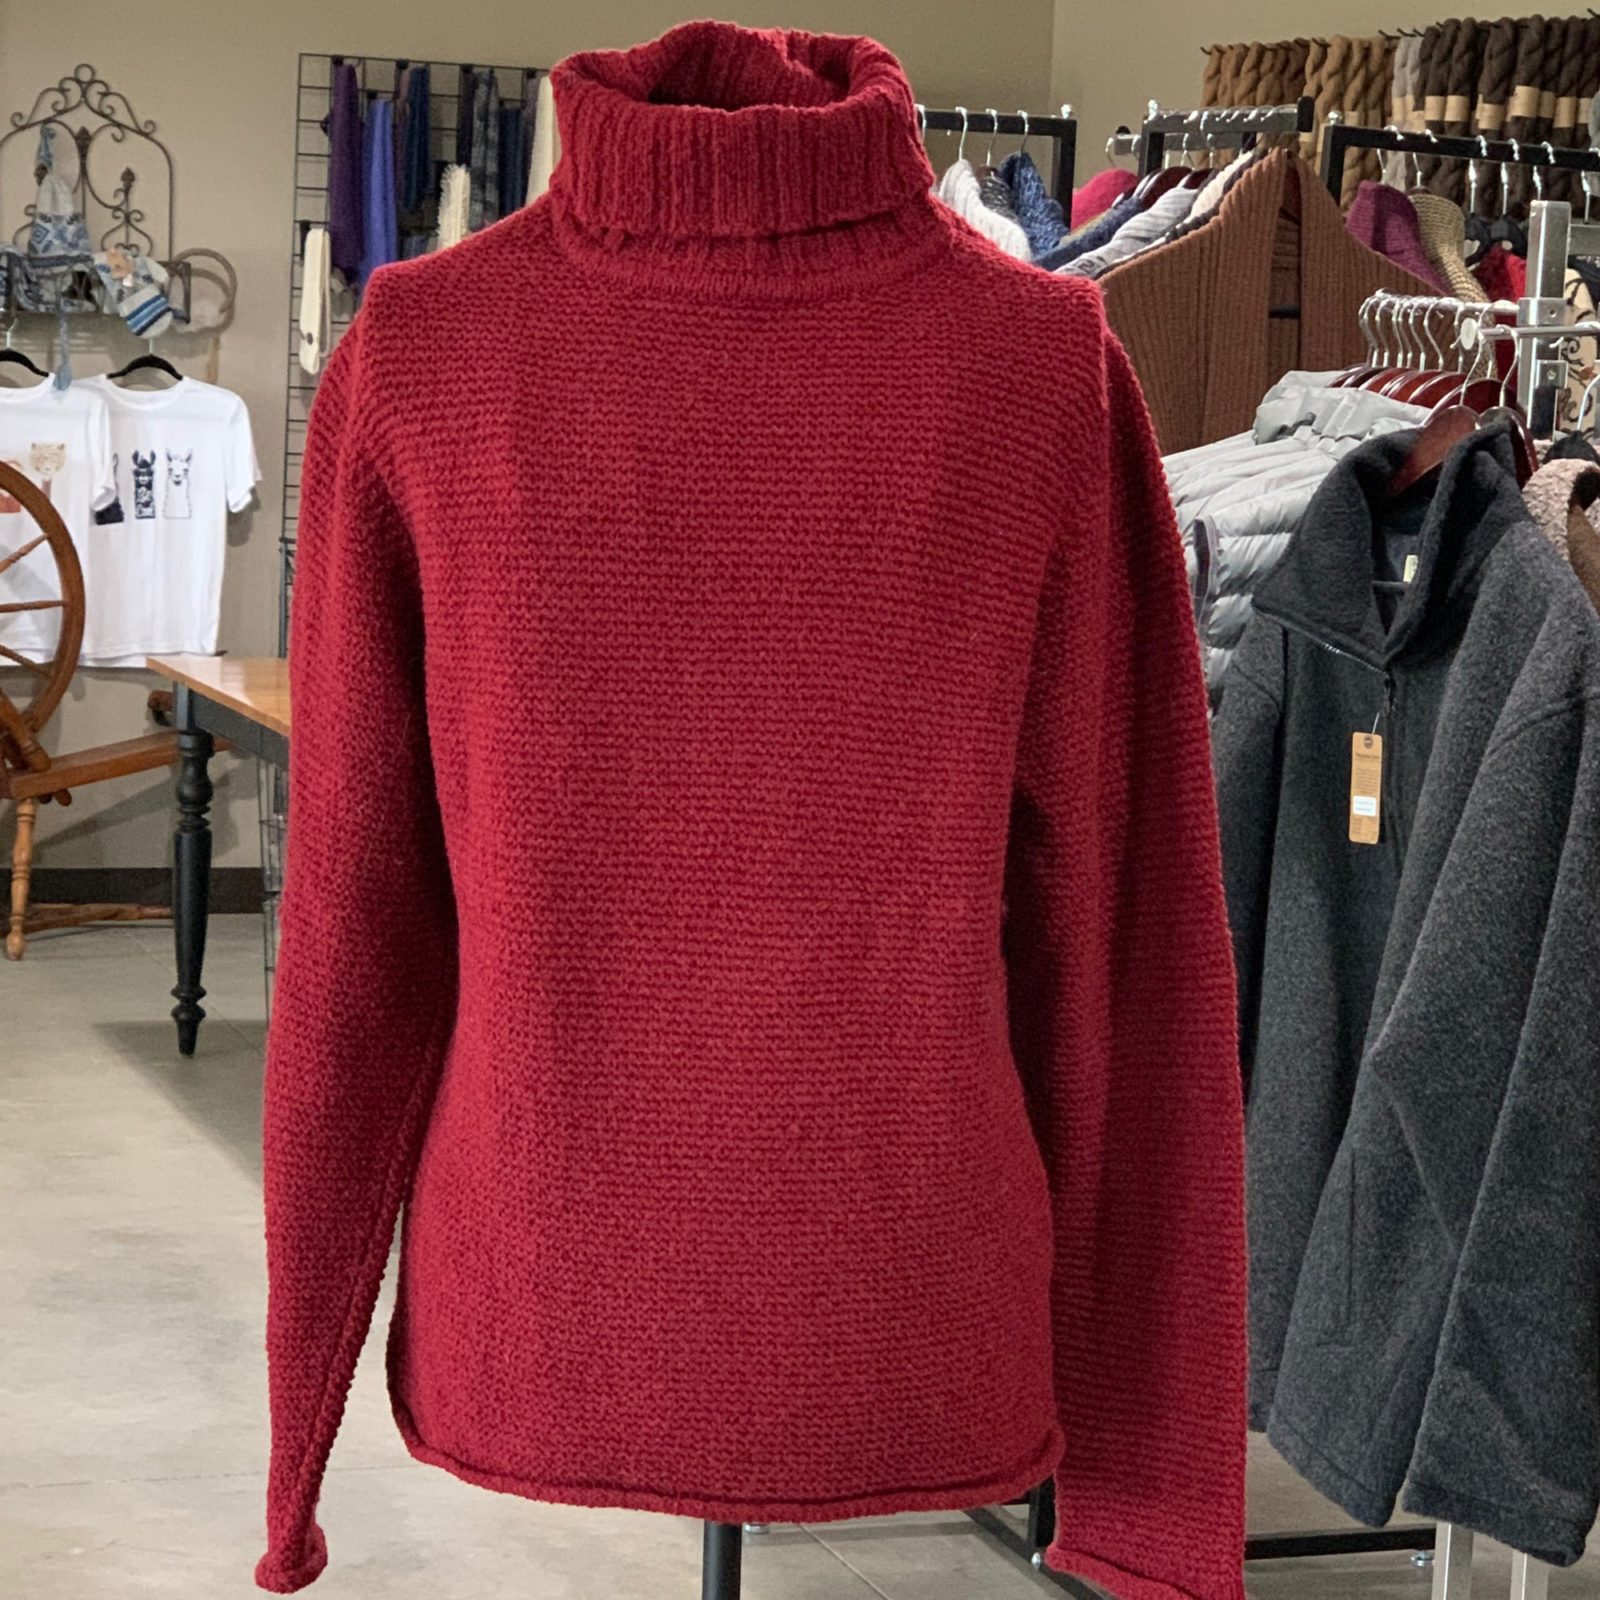 Merlot Garter Turtle Neck Sweater - Women's Medium